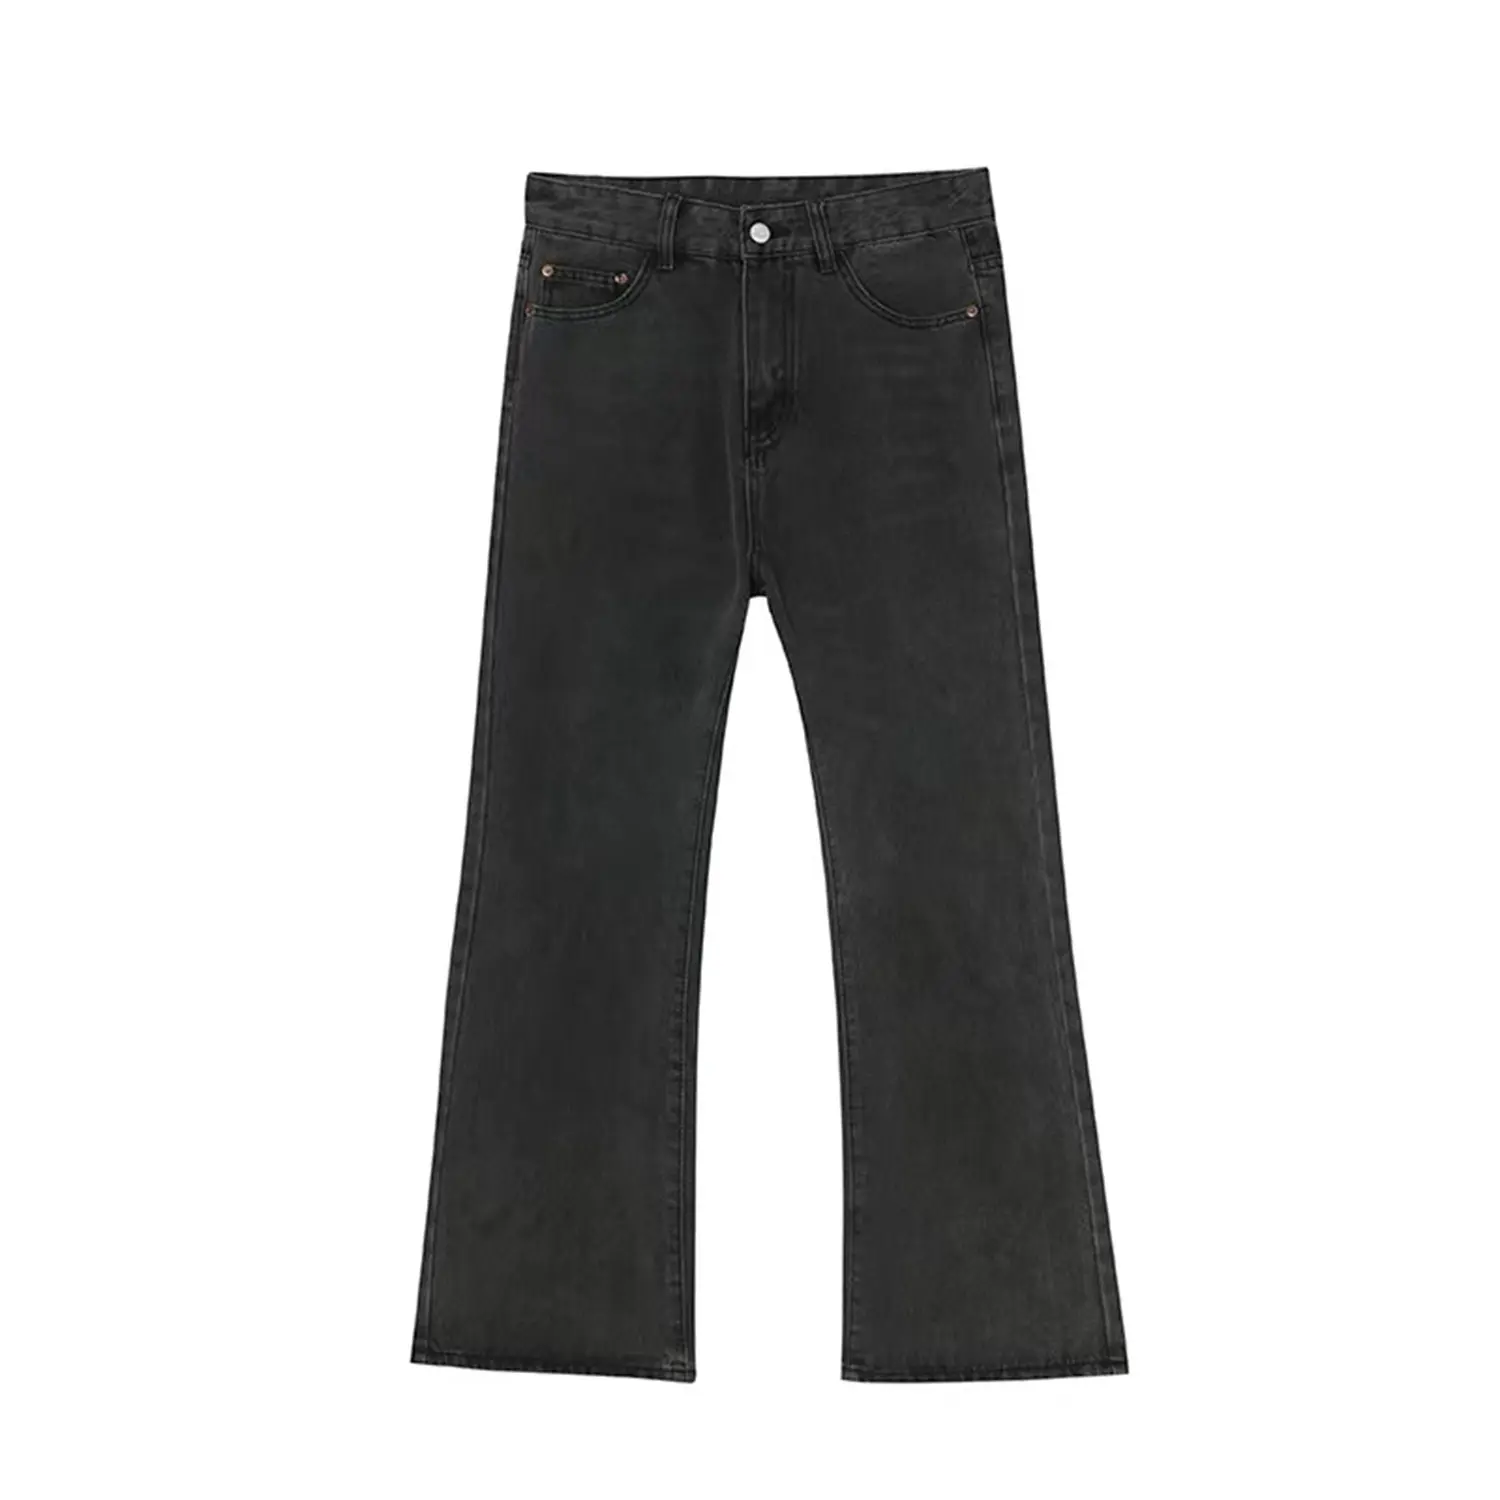 Men High Street Hip Hop Casual Small Flare Jeans Pant Male Japan Korea Style Vintage Denim Trousers Pant Jeans